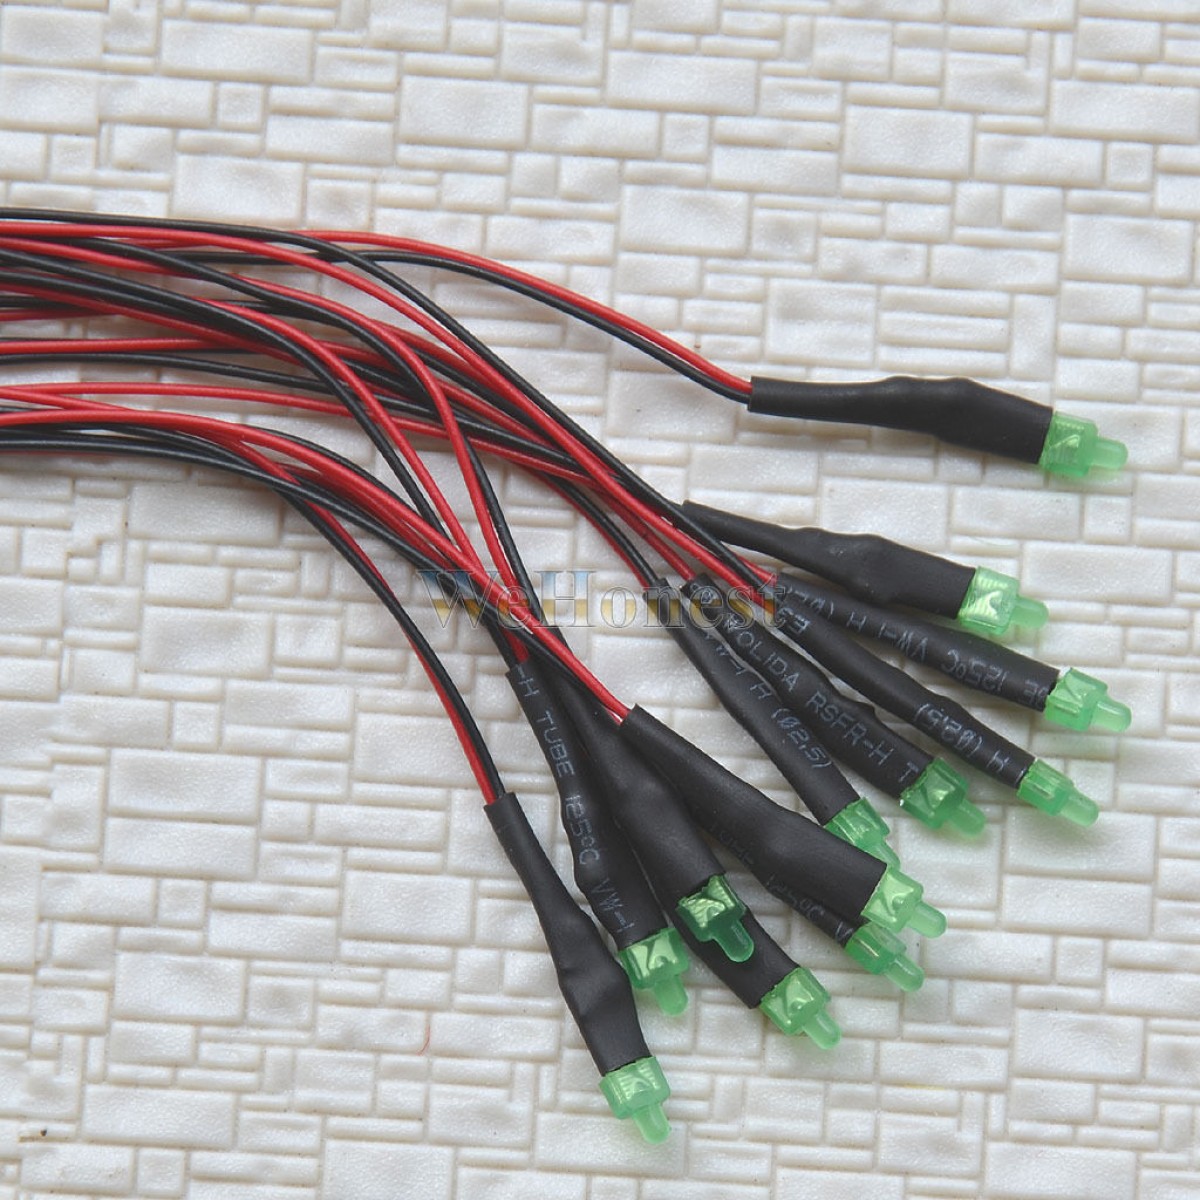 5 x Pre-Wired 2mm Green LEDs prewired resistor for 12V - 18V DC use